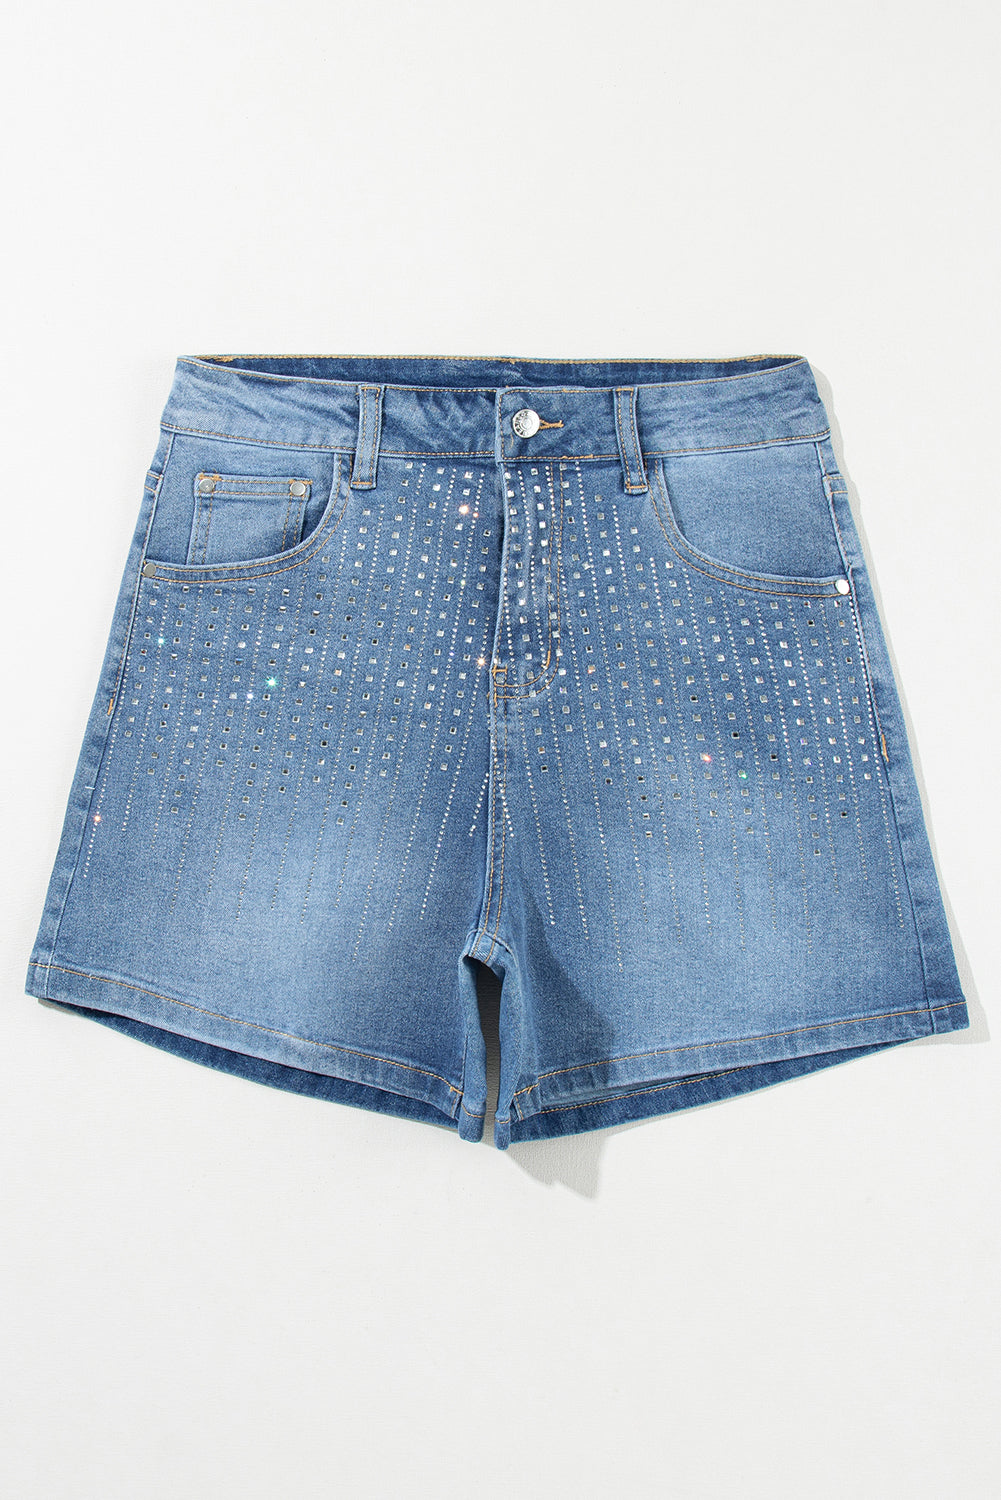 - Ashleigh Blue Rhinestone Embellished Denim Shorts - women's denim shorts at TFC&H Co.